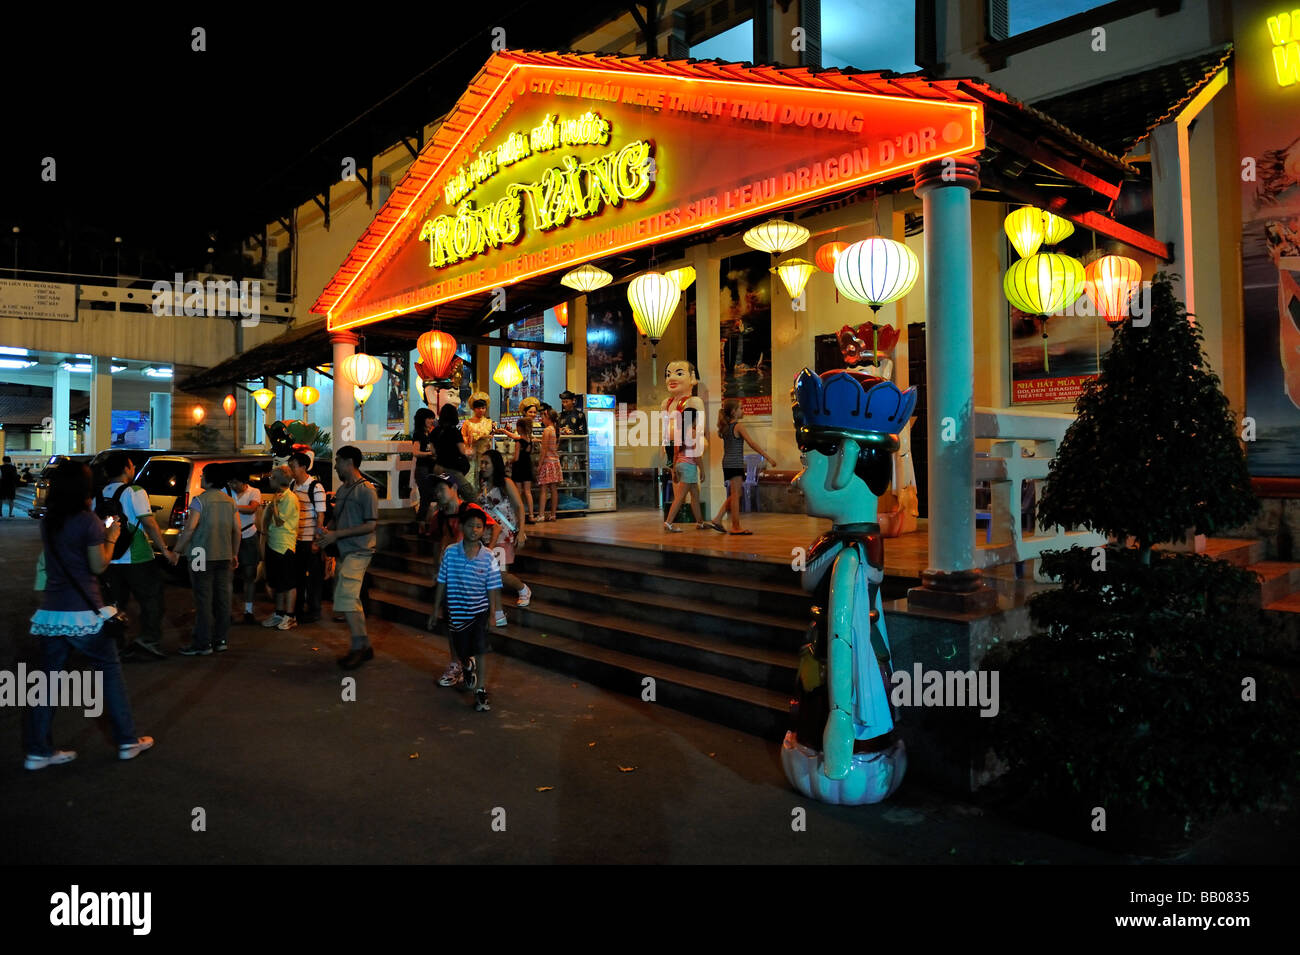 The Golden Dragon Water Puppet Theatre, Ho Chi Minh City (Saigon), Vietnam Stock Photo